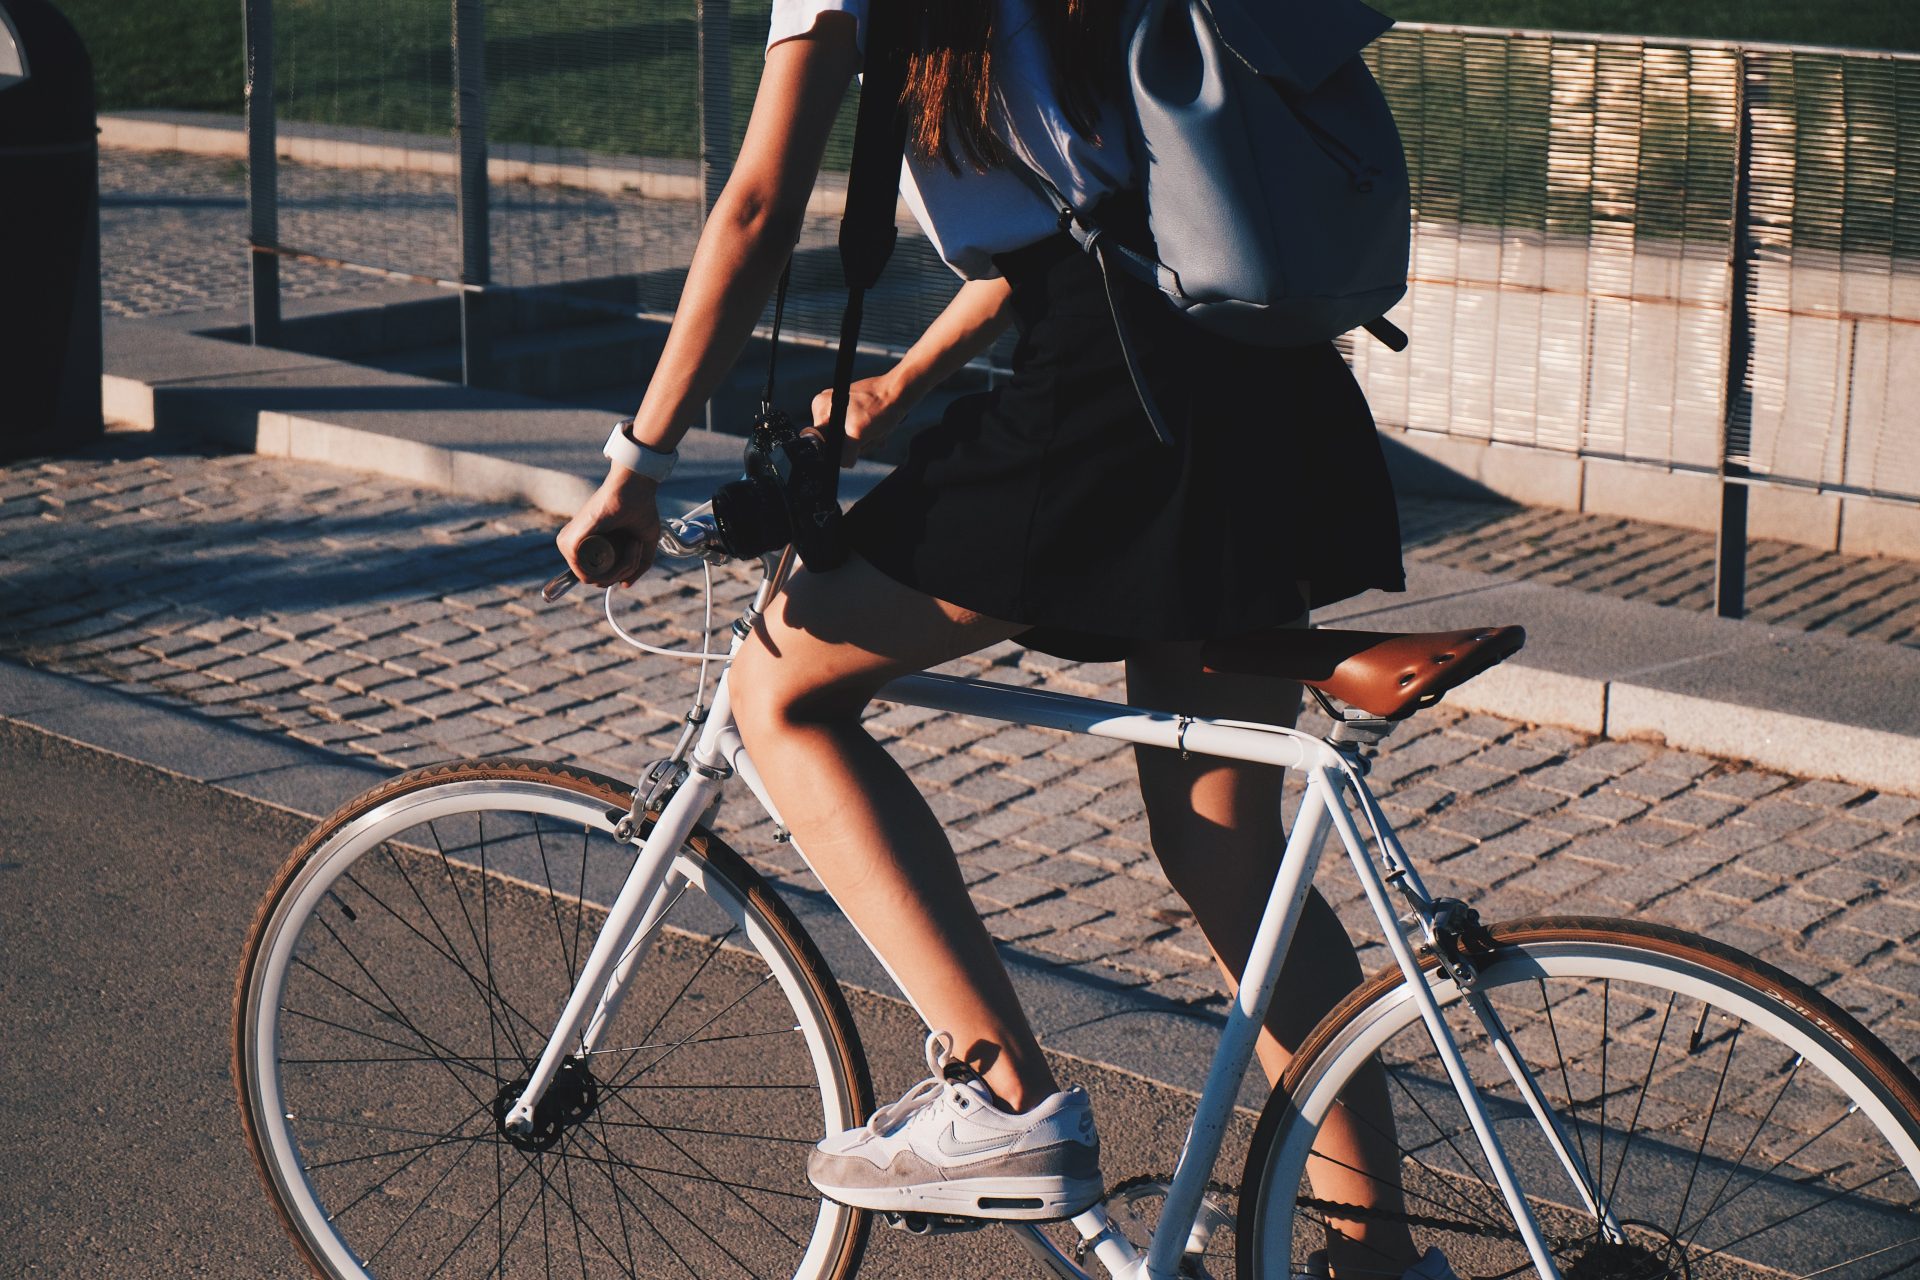 Procure andar de bike, skate, patinete e transporte público